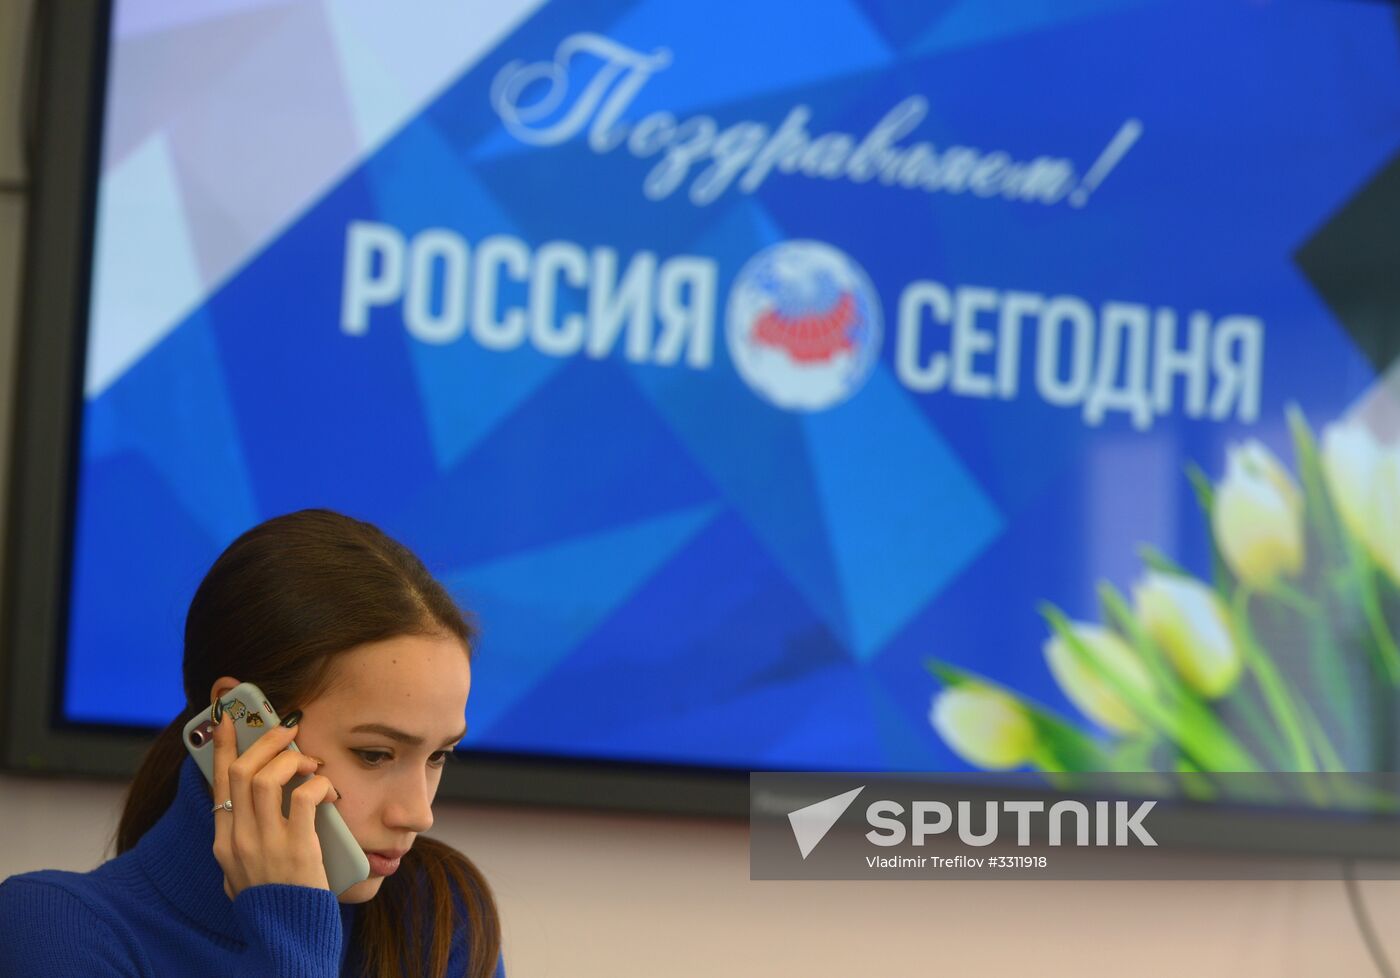 Figure skaters Alina Zagitova and Yevgenia Medvedeva take on the role of RIA Novosti editors